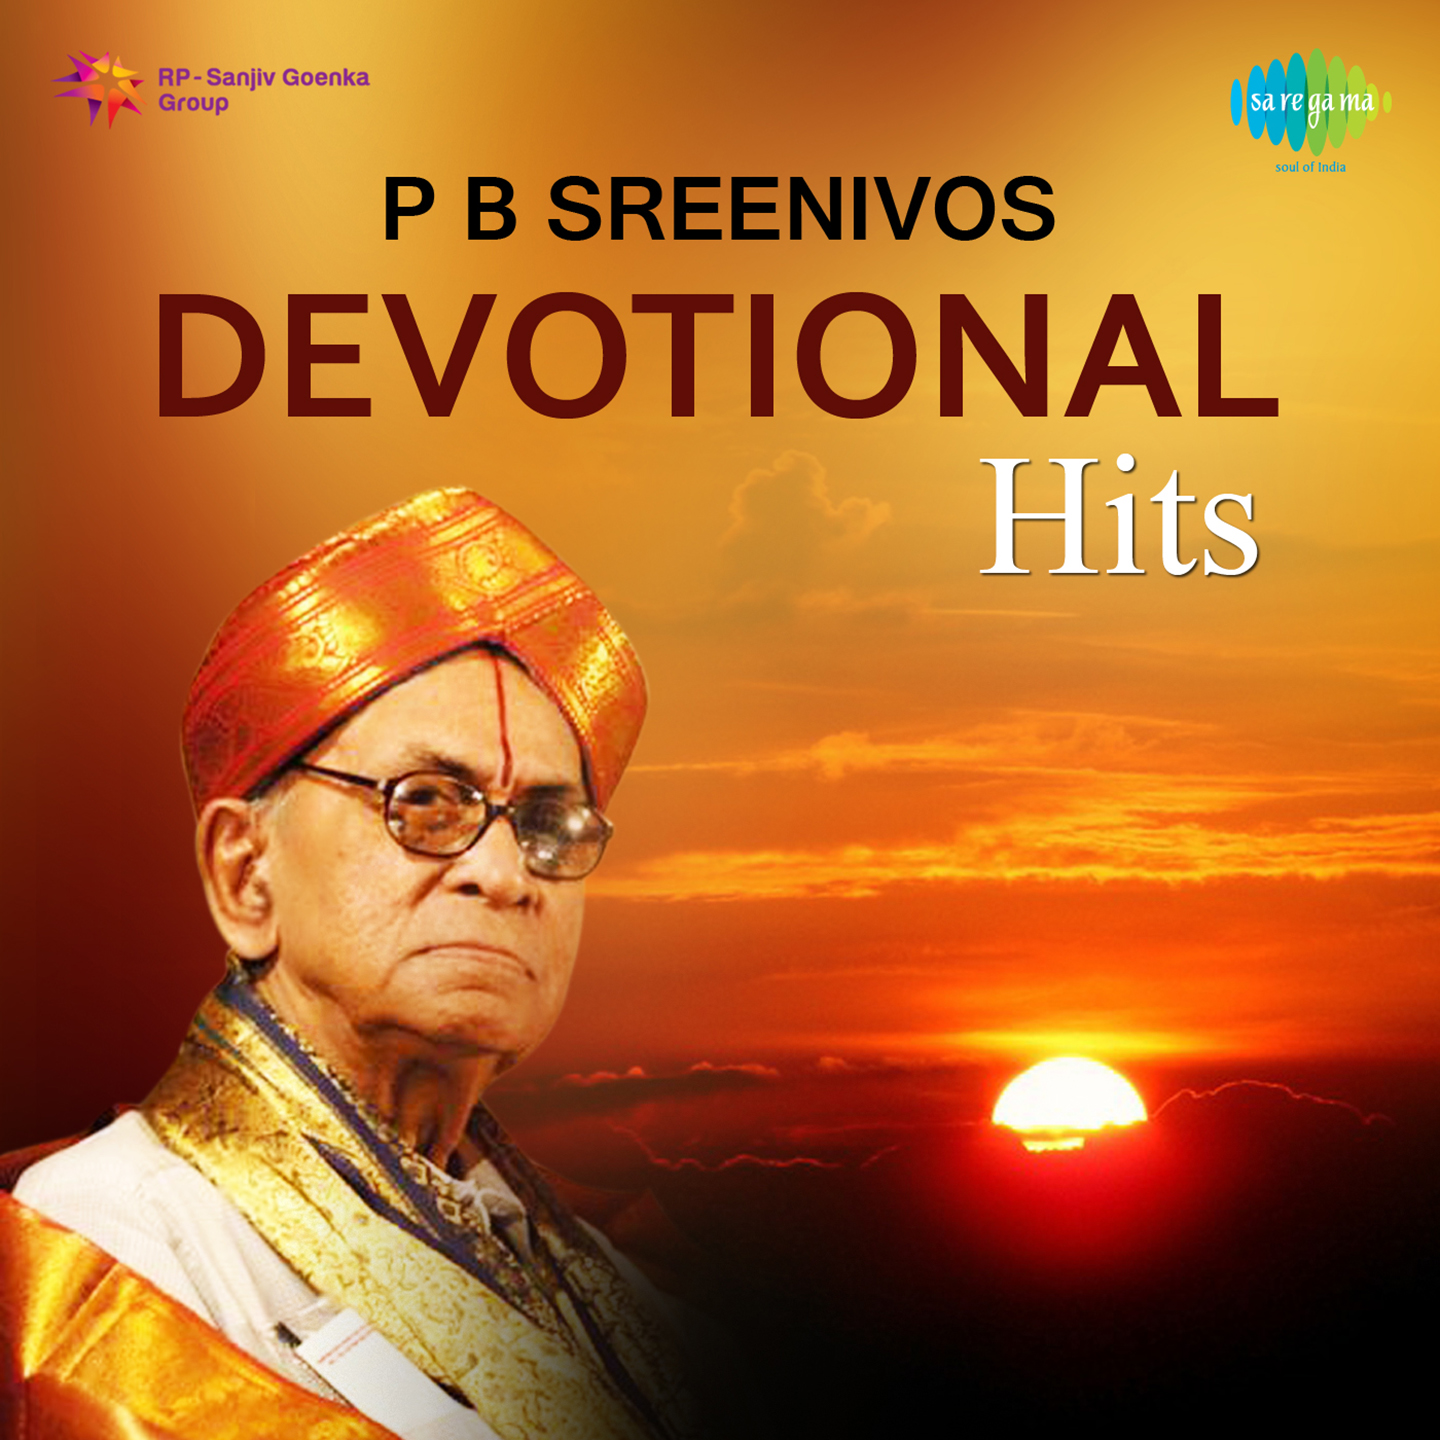 P B Sreenivos Devotional Hits